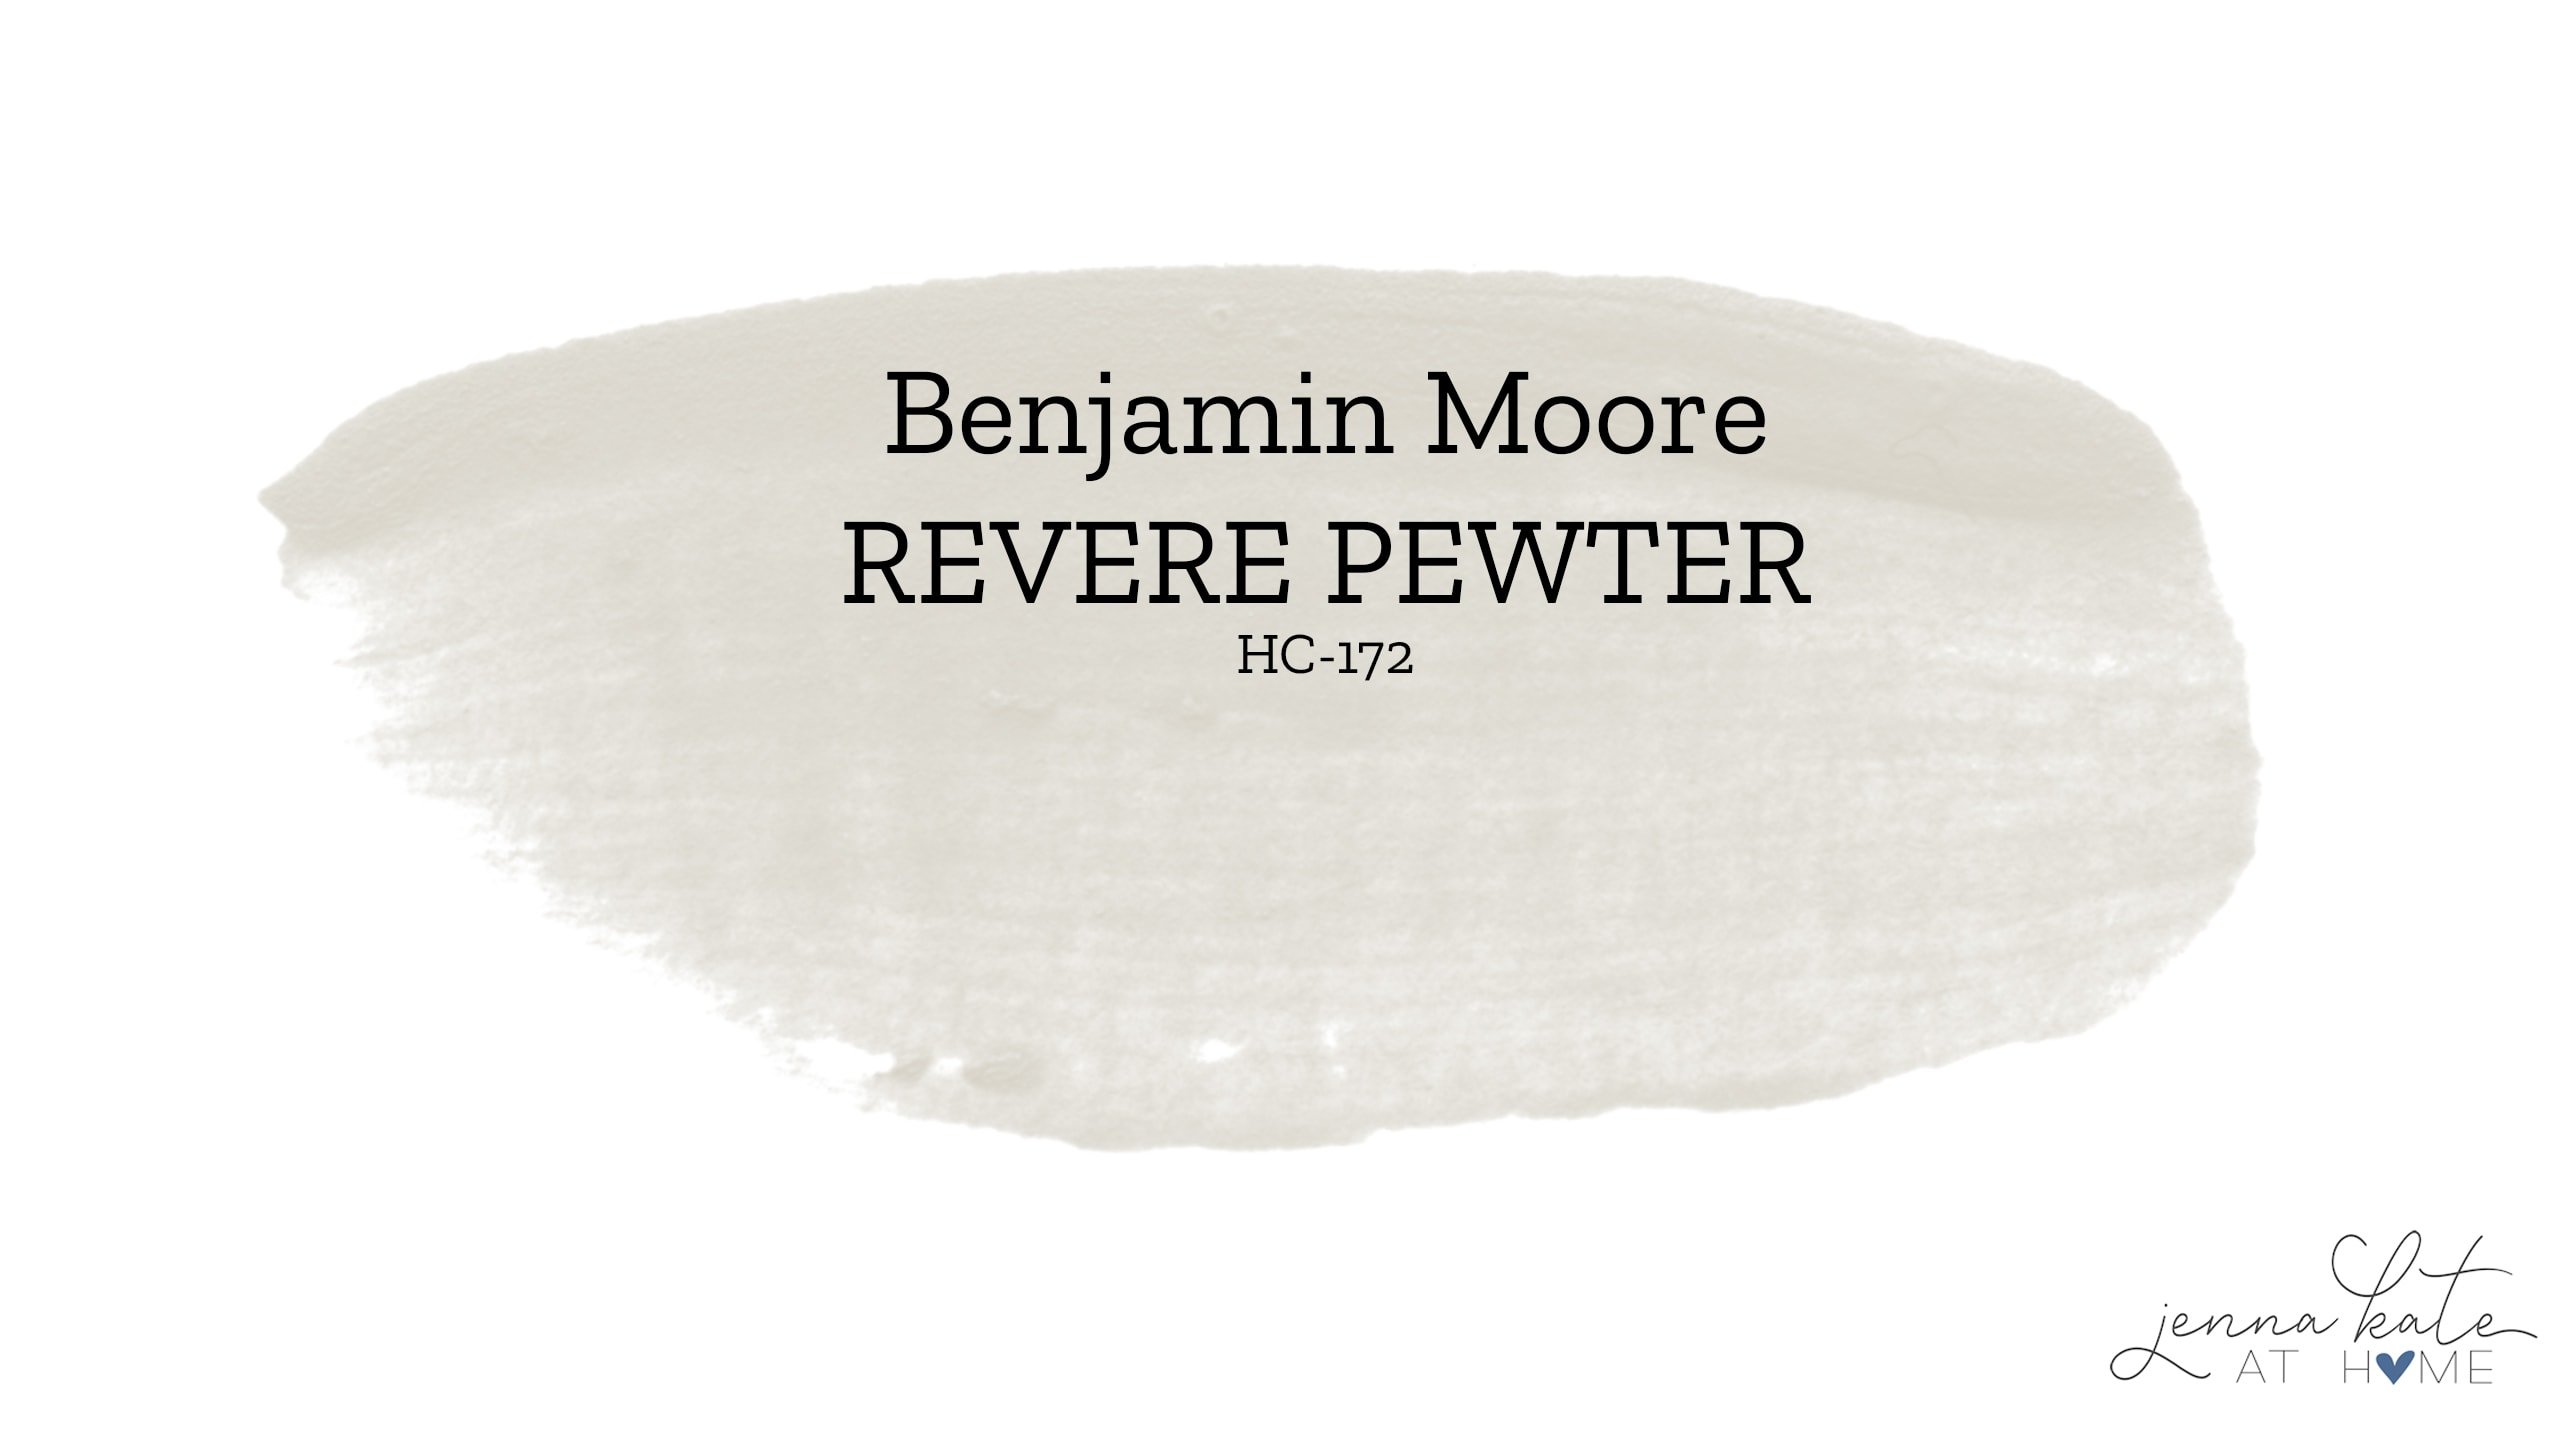 Benjamin Moore paint shade called Revere Pewter